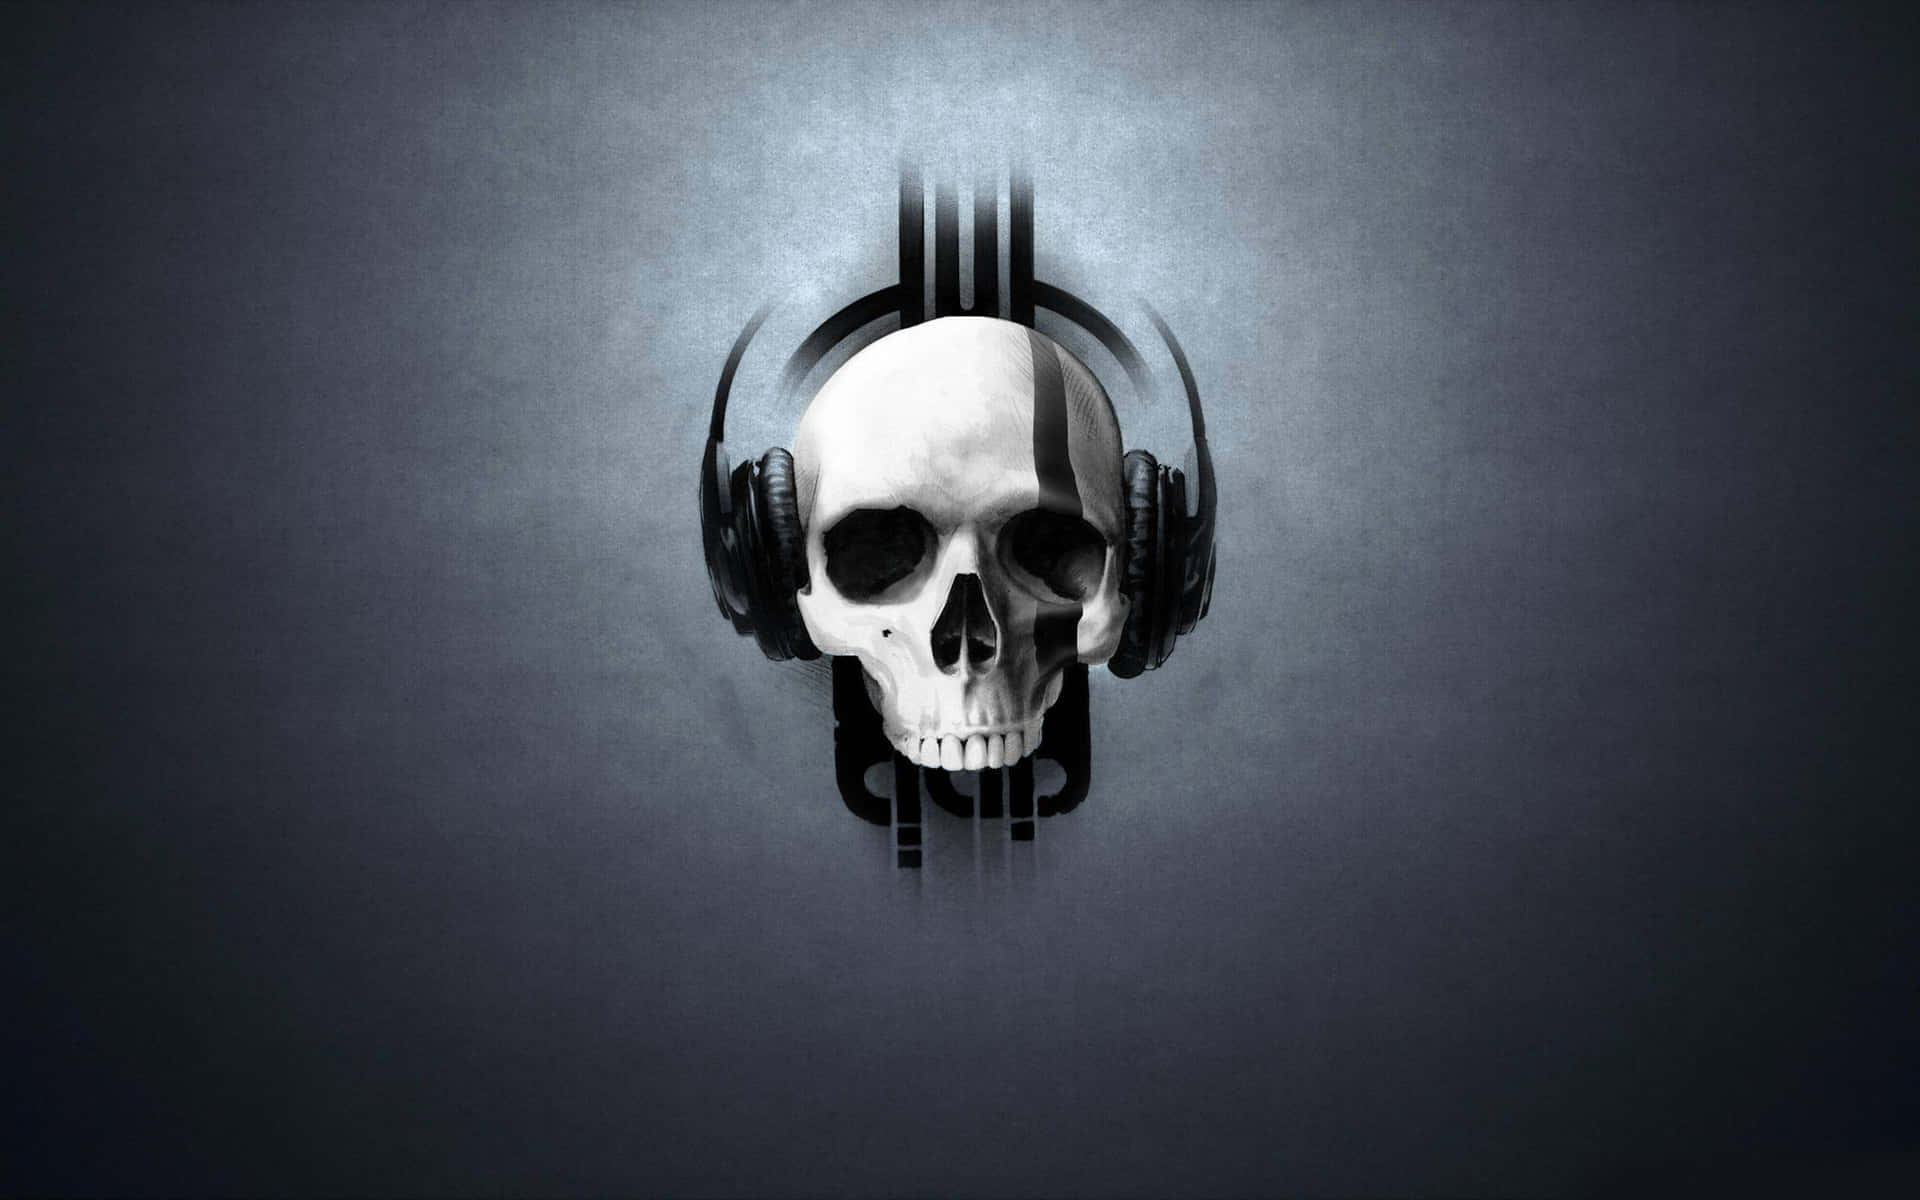 Skull With Headphones On A Dark Background Wallpaper